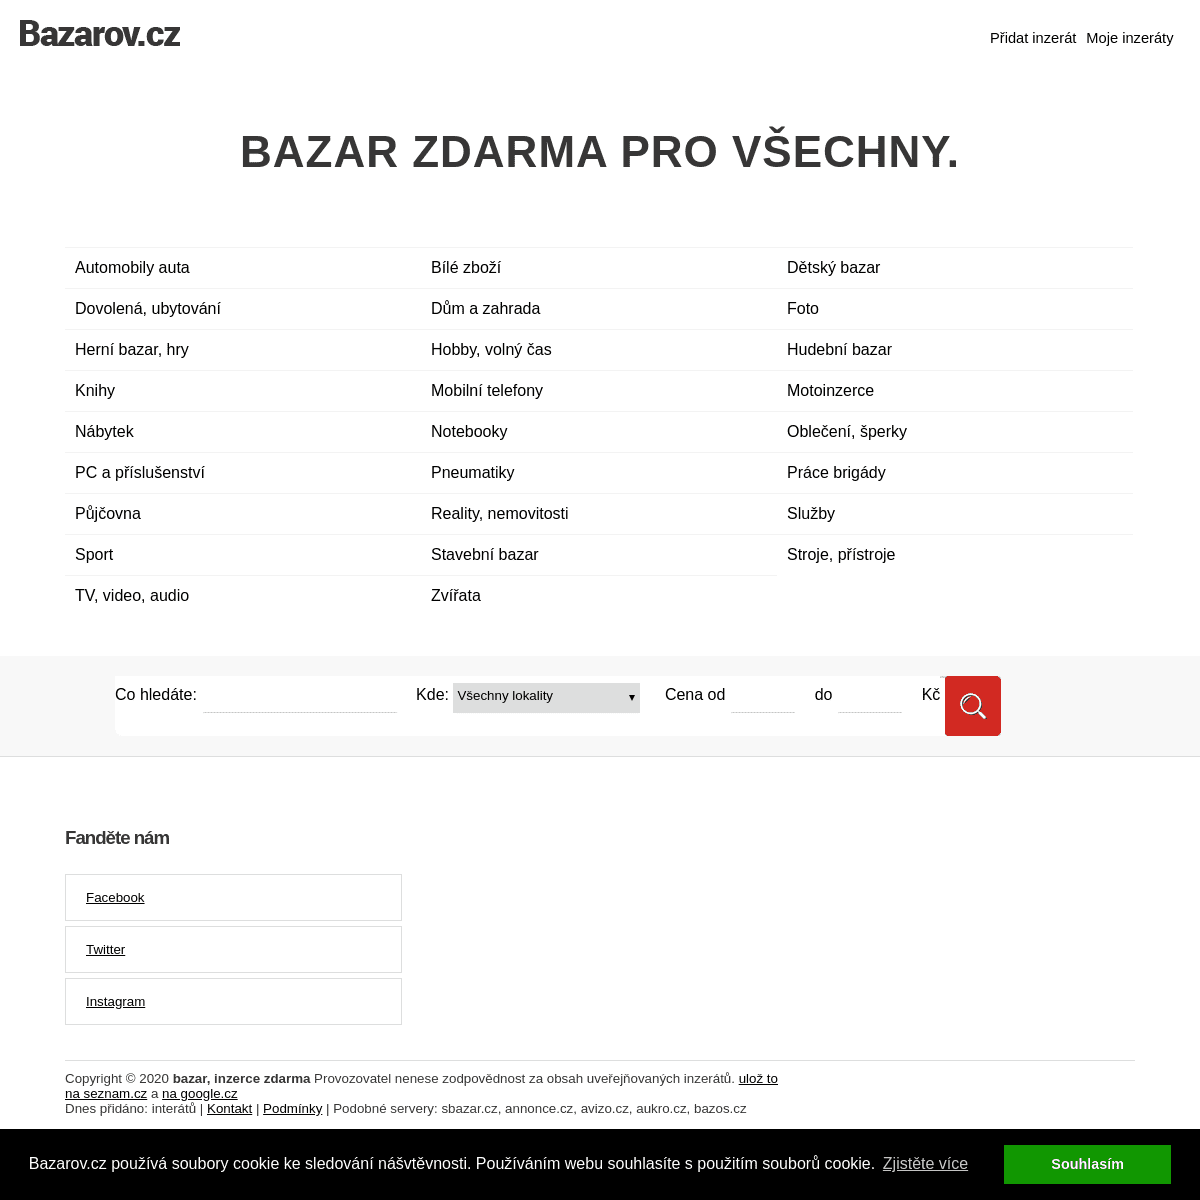 A complete backup of bazarov.cz